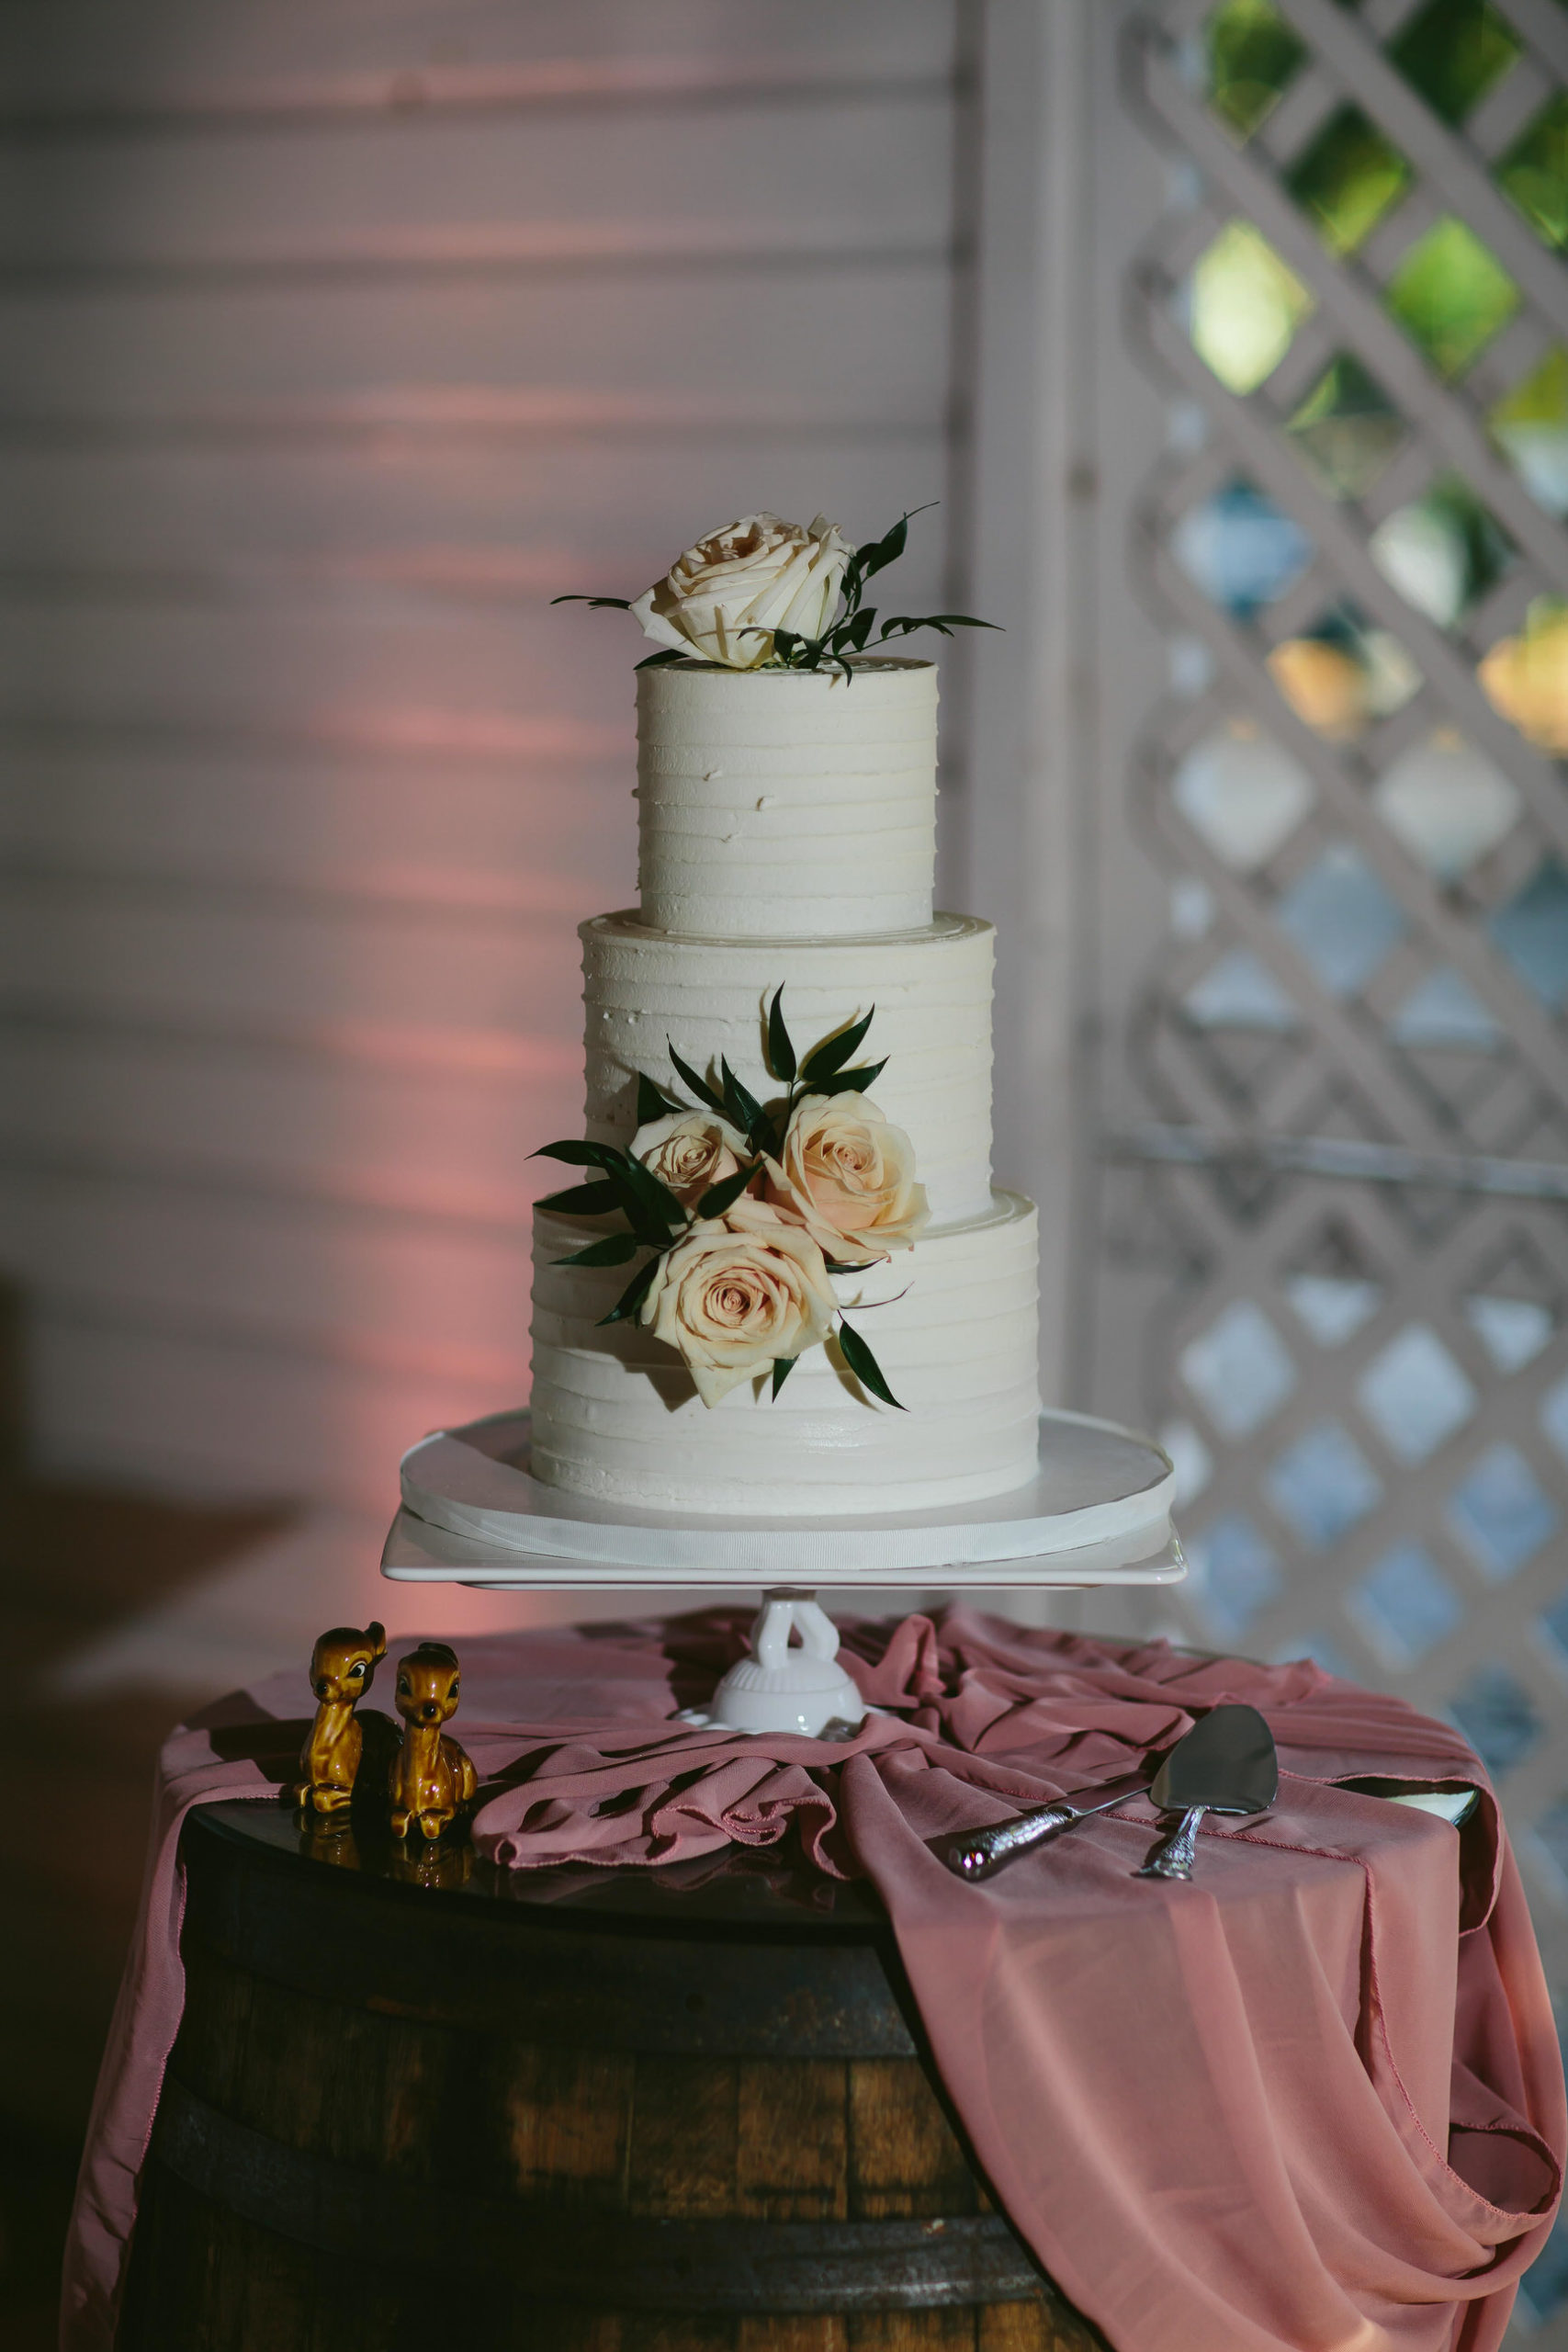 bunniecakes vegan wedding cake tiny house photo